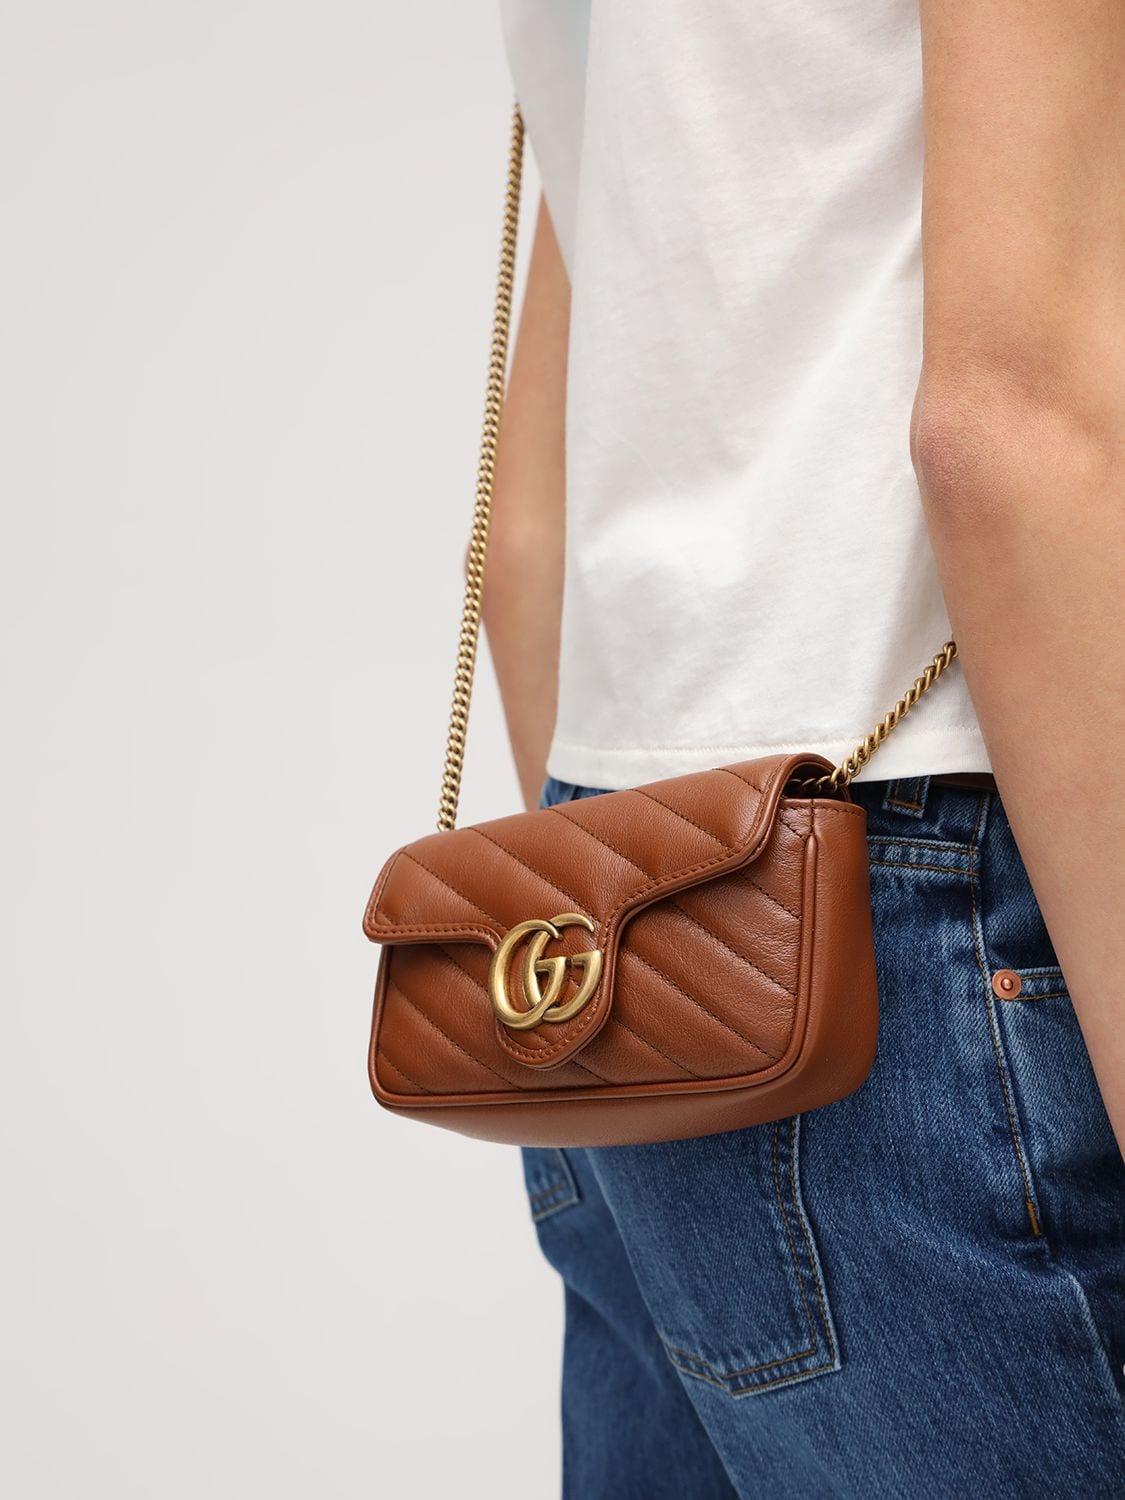 Gucci Super Mini Gg Marmont Leather Bag in Brown